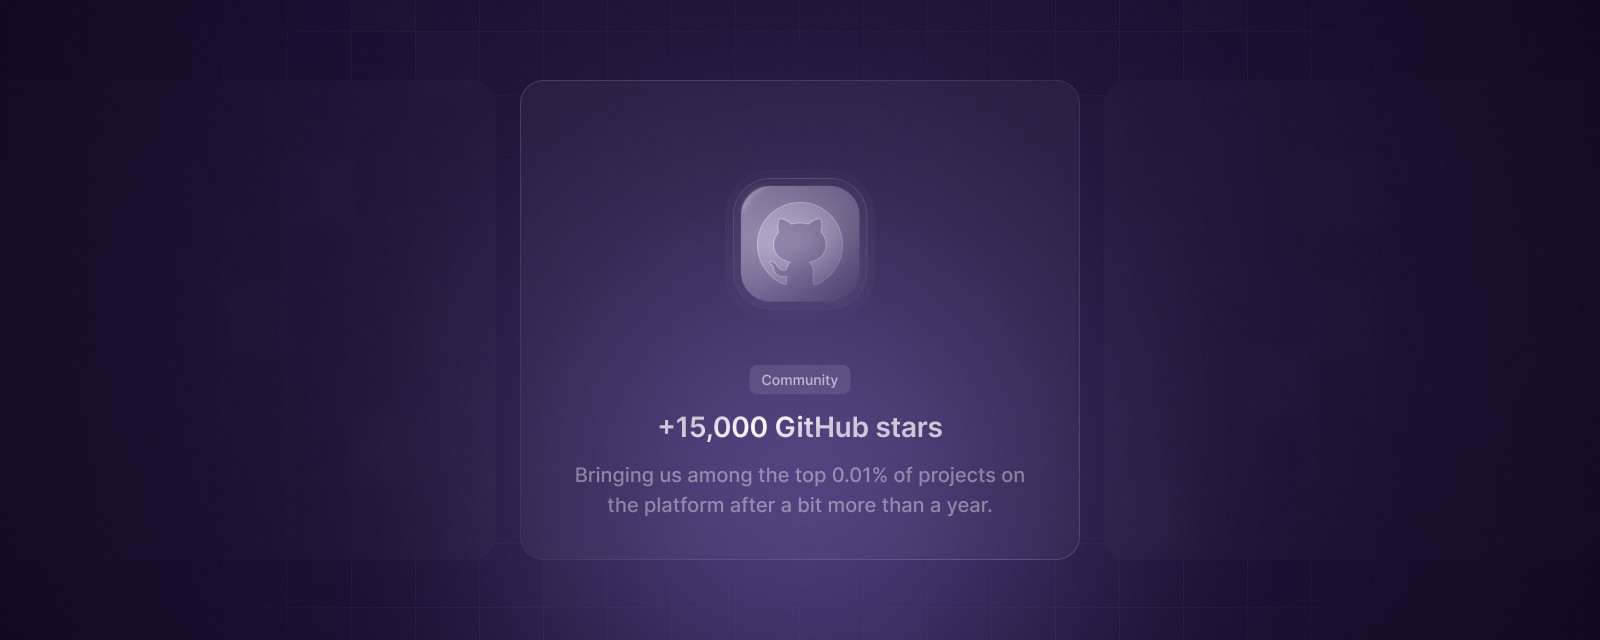 +15,000 GitHub stars
